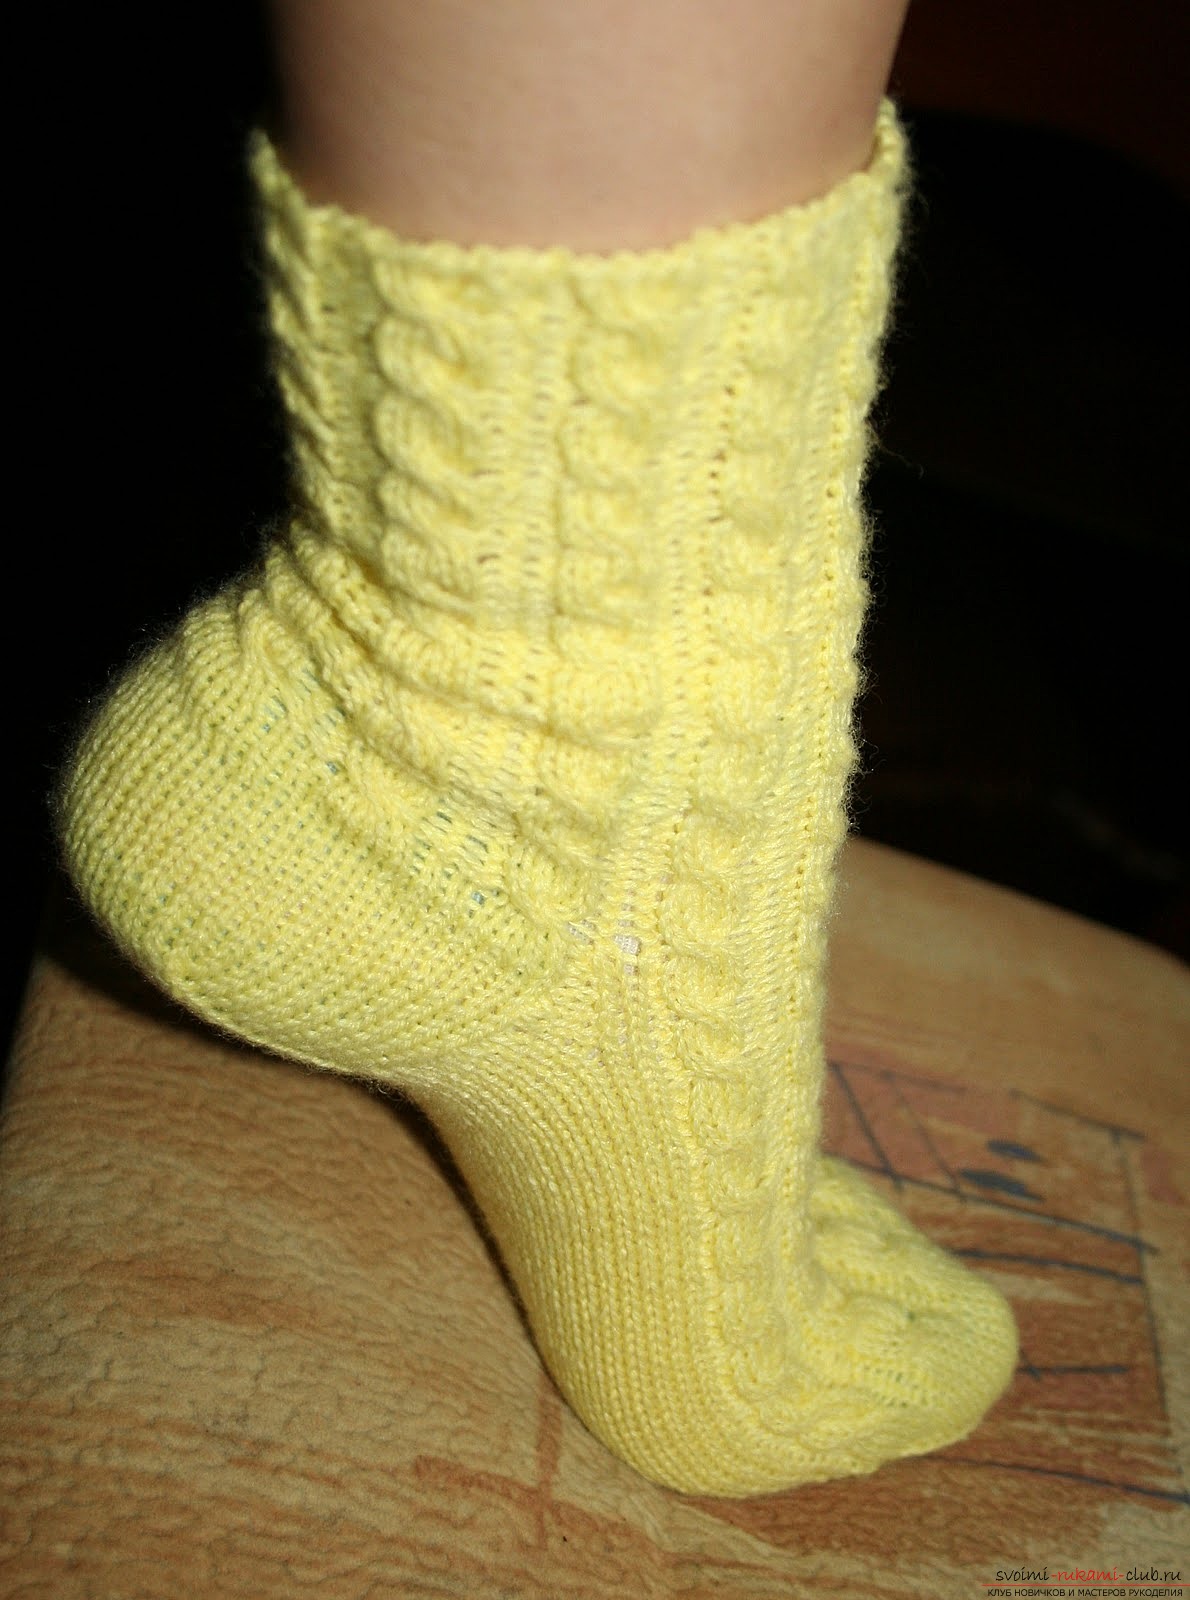 openwork socks with knitting needles. Photo №4